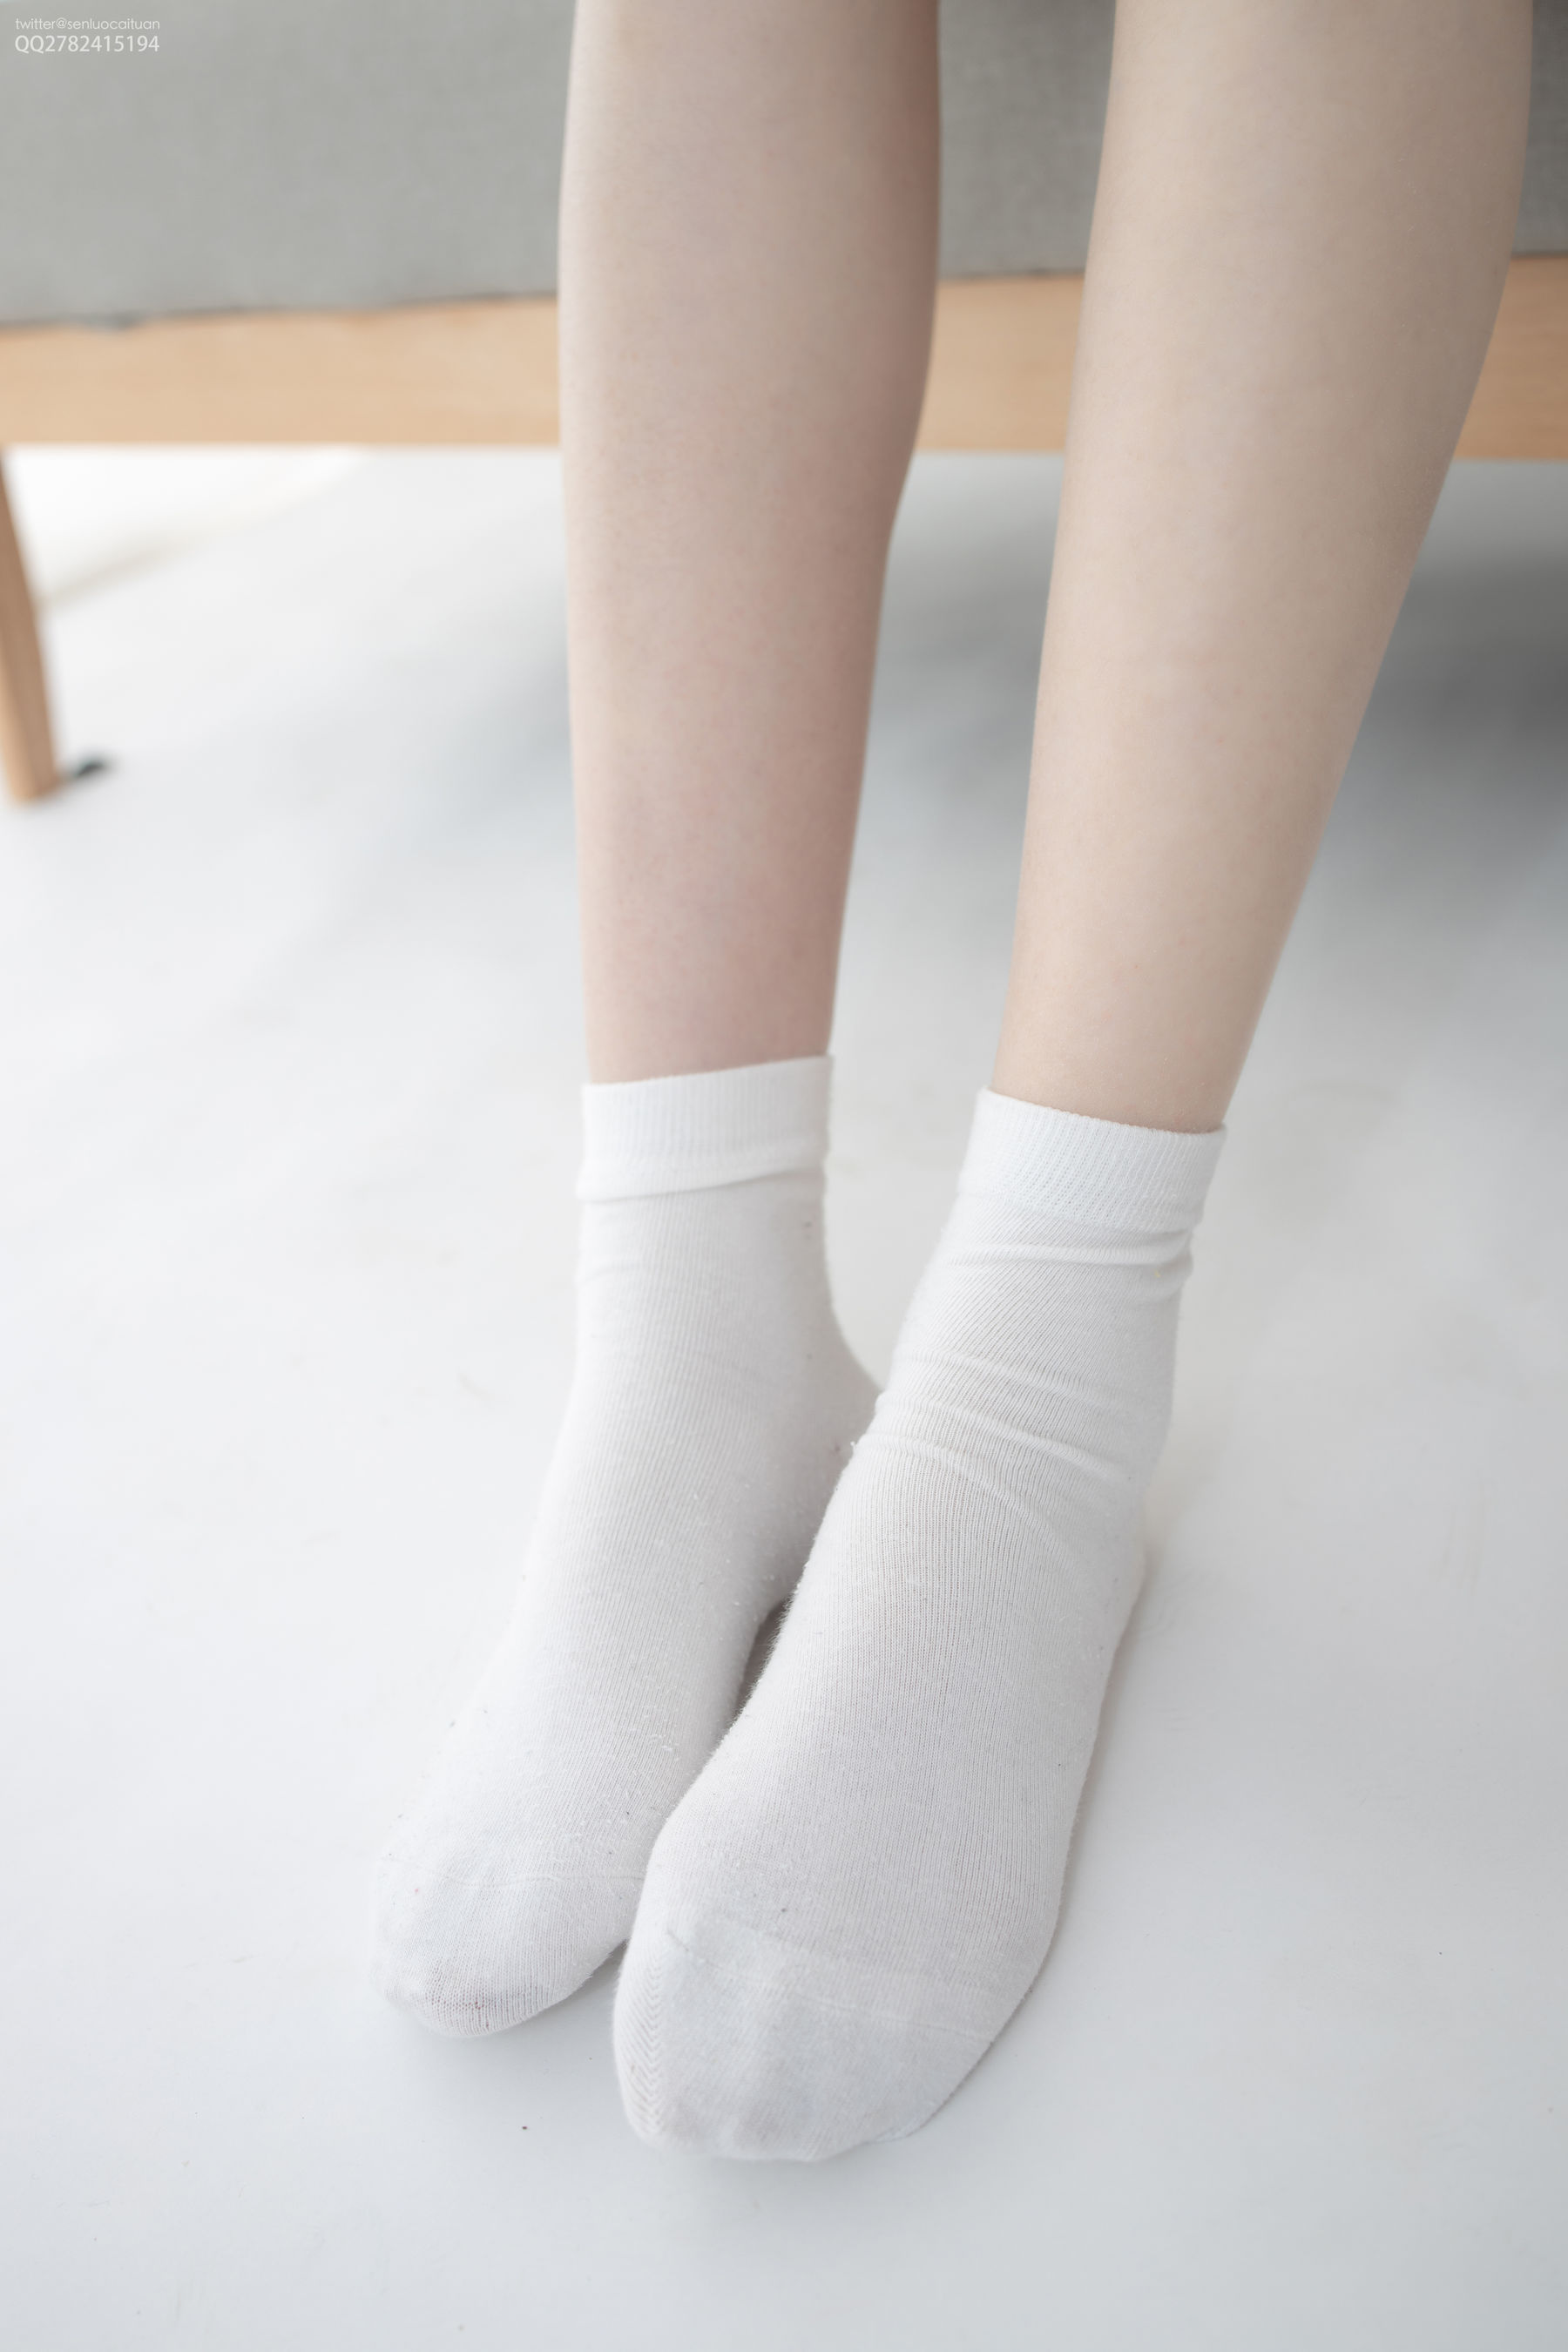 Aika “Short Cotton Socks” (Senluo Foundation) JKFUN-040 Photo Album